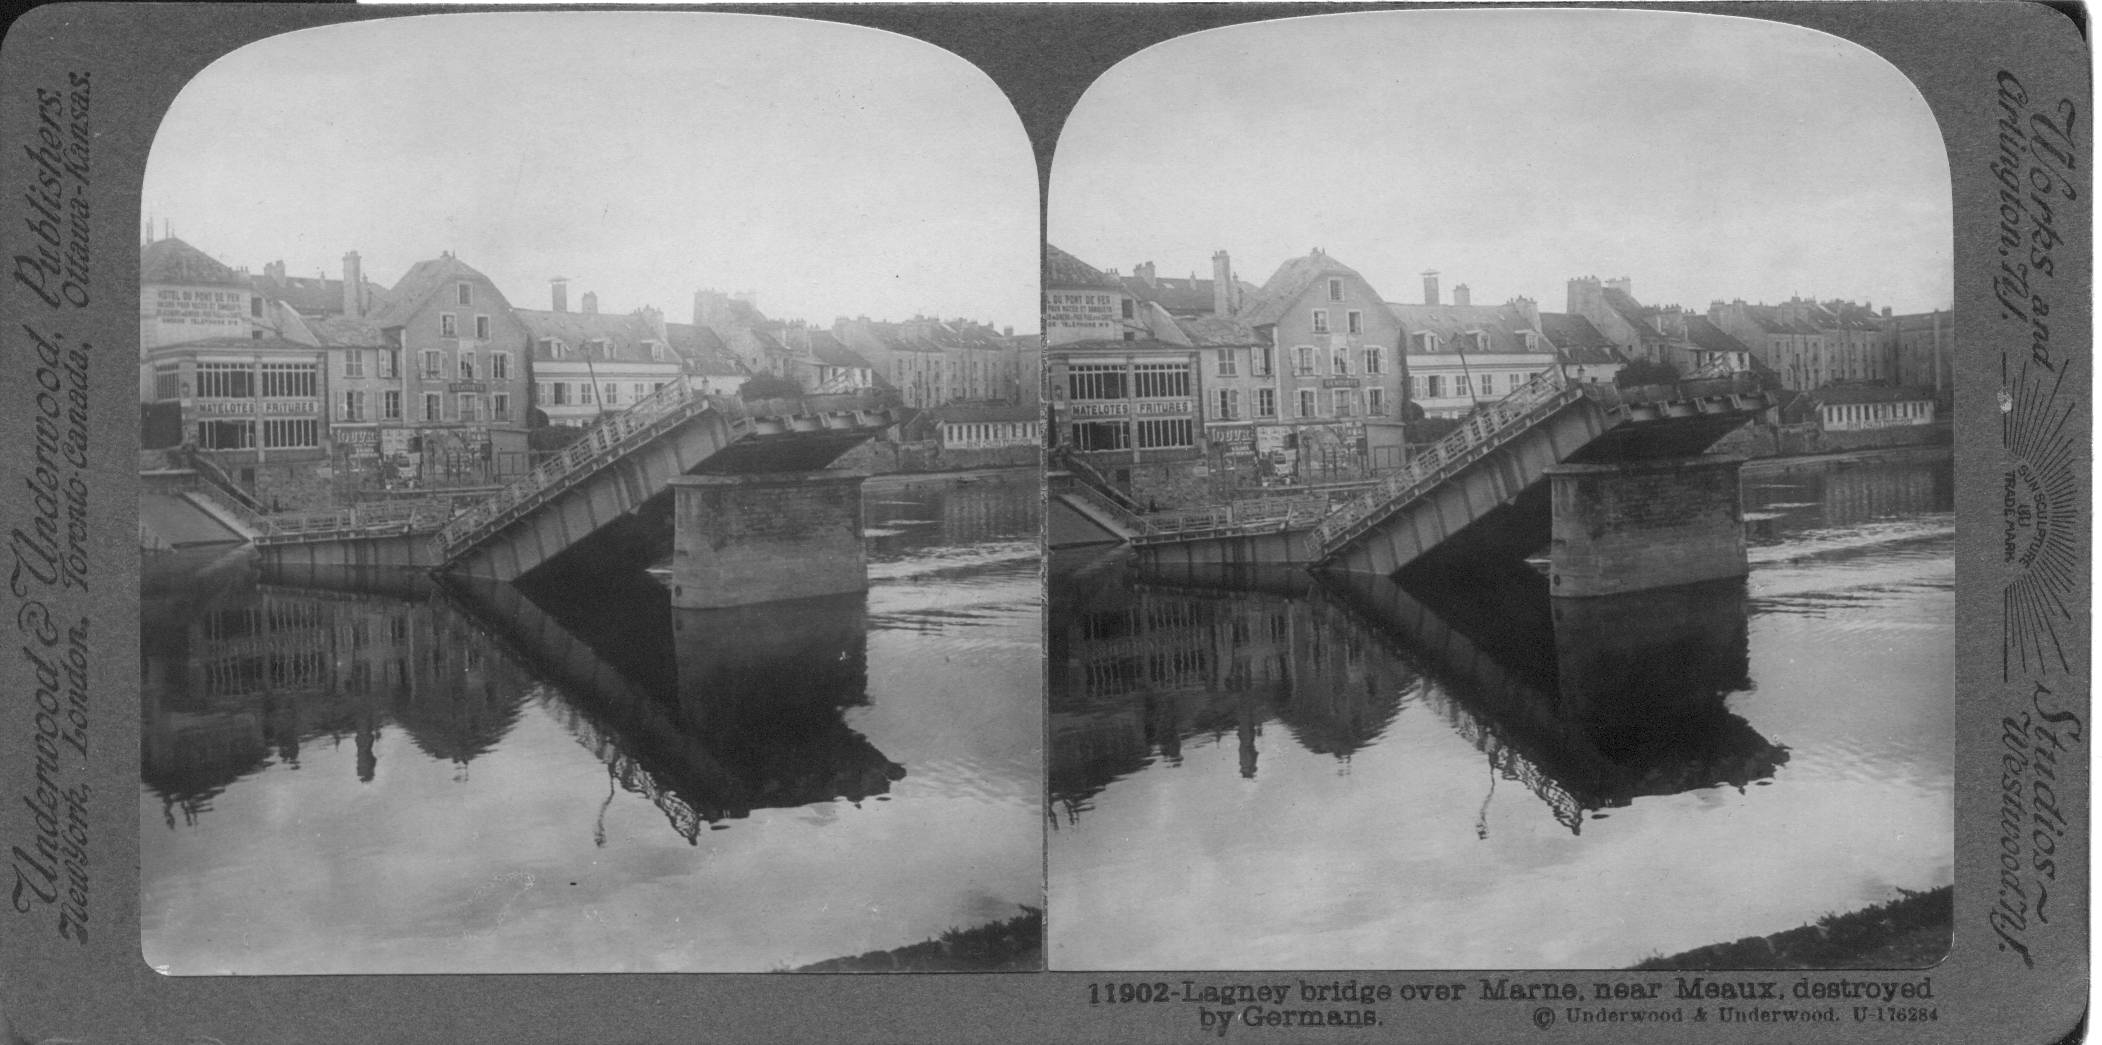 Lagney bridge over Marne, near Meaux, destroyed by Germans